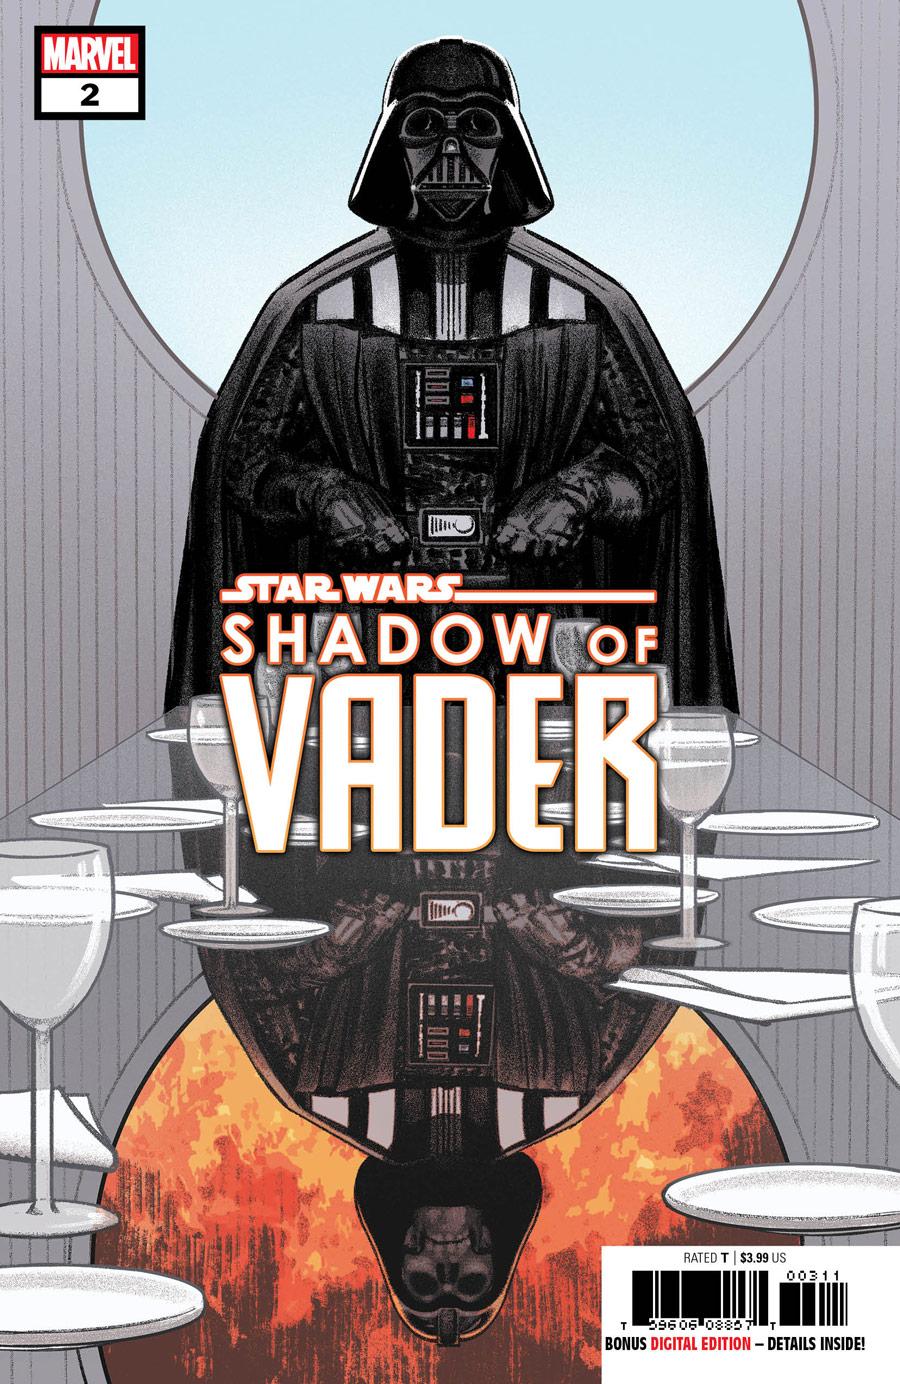 Shadow of Vader Vol. 1 #2